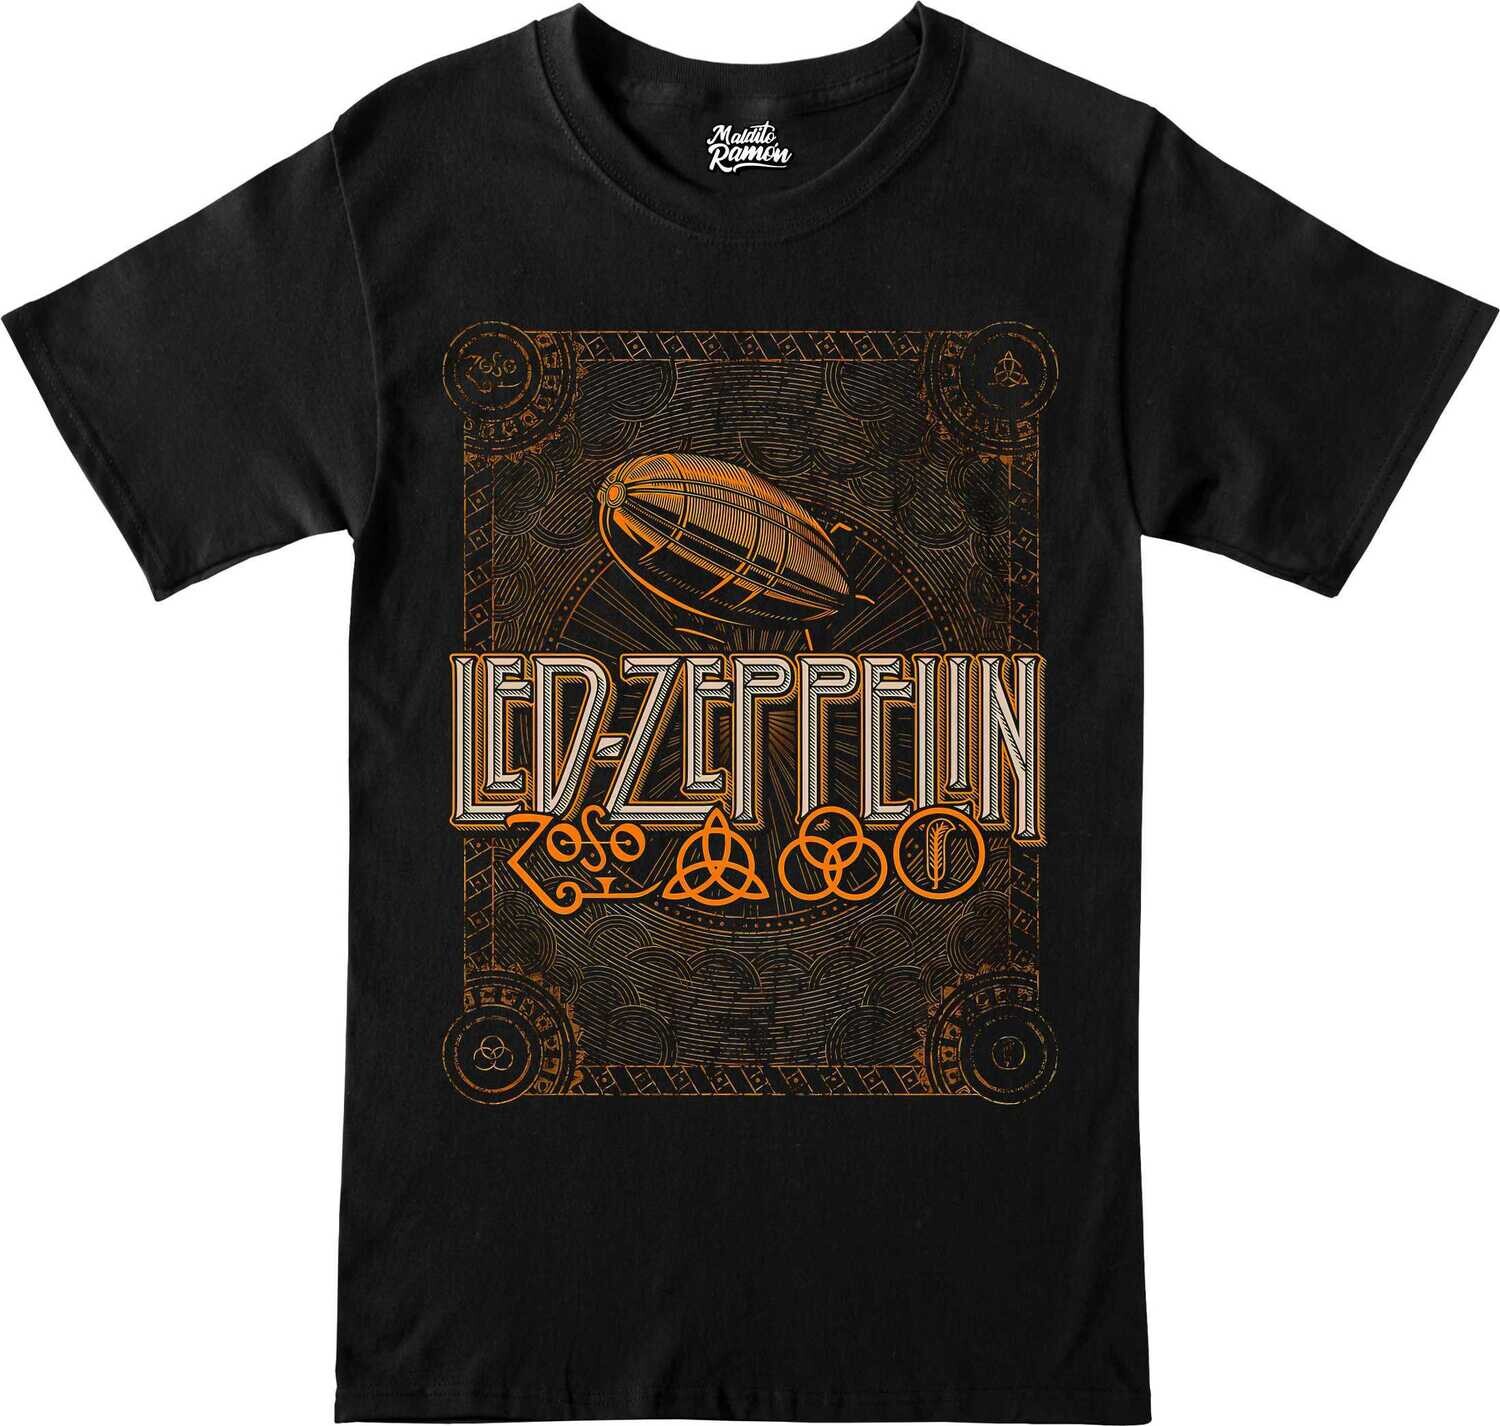 Remera Led Zeppelin